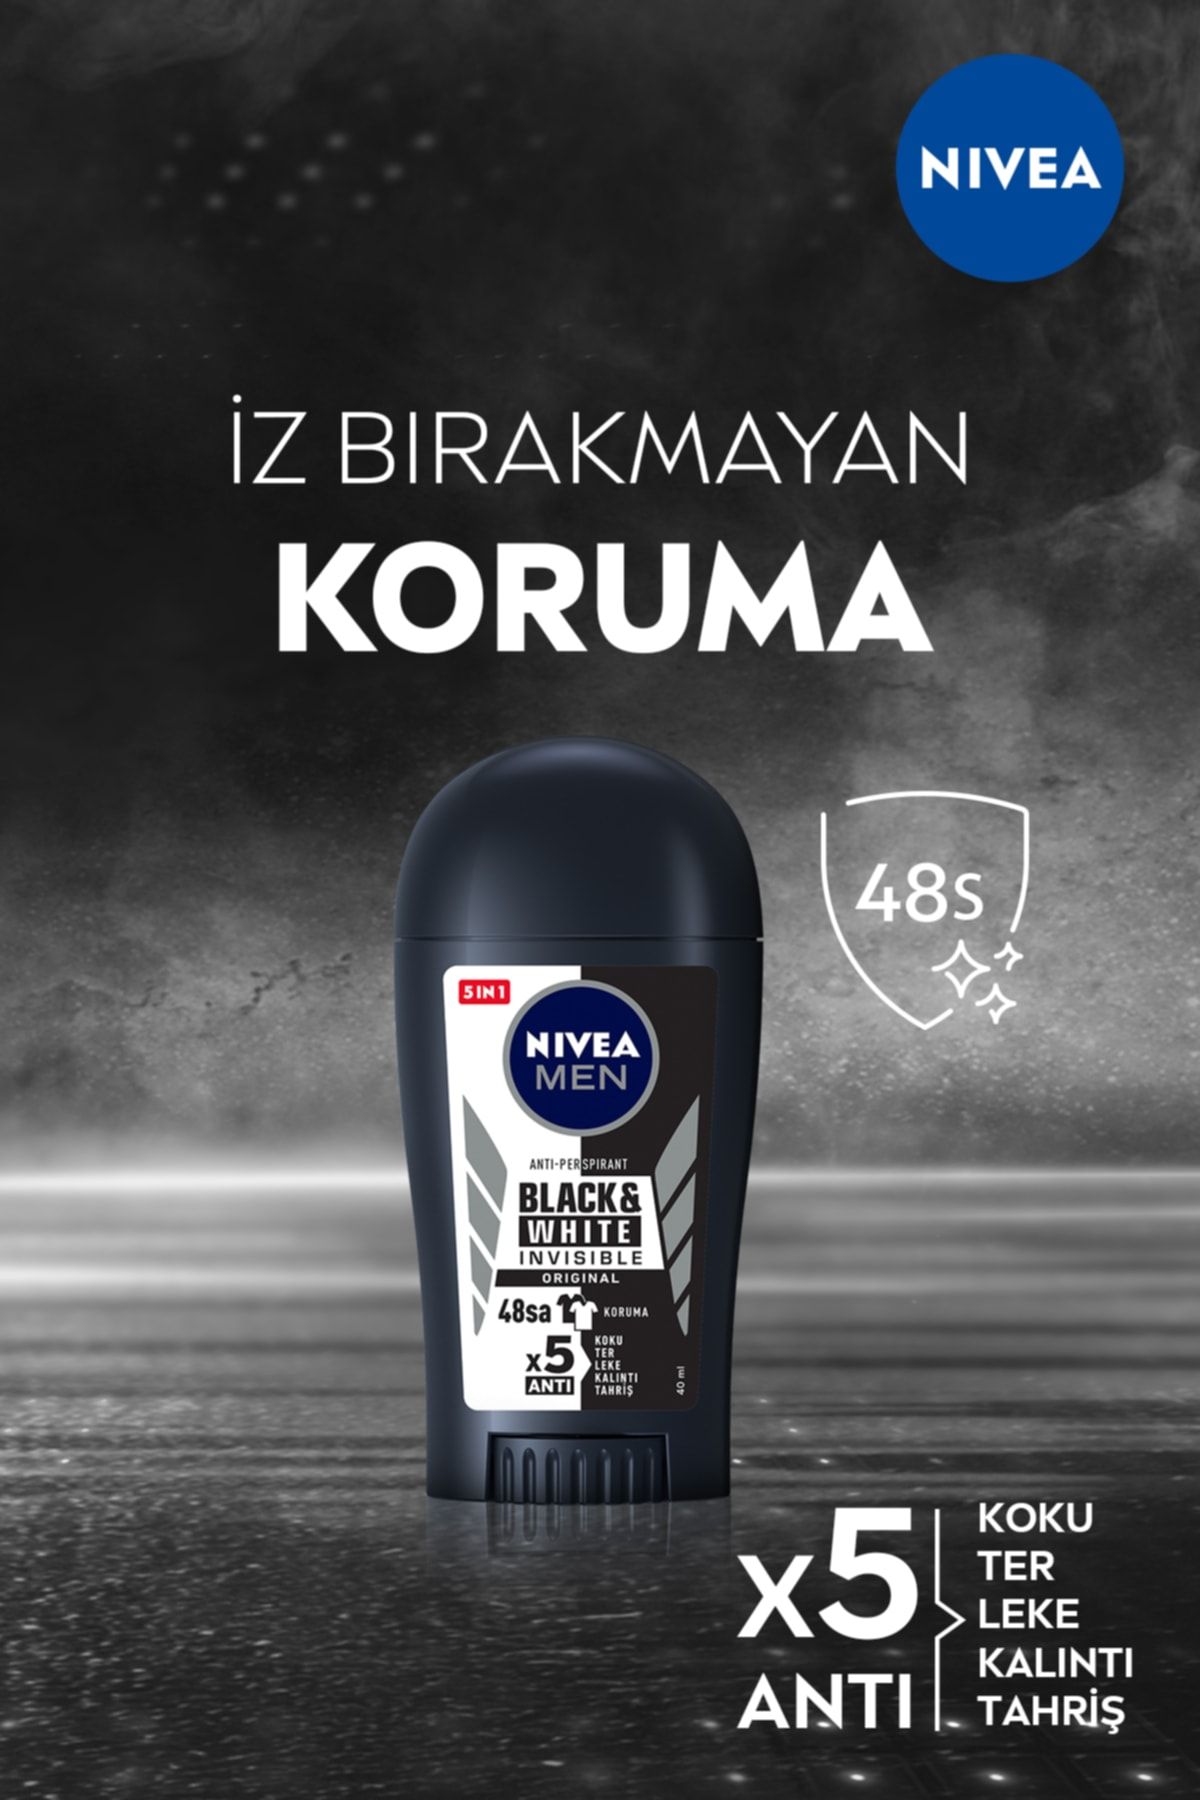 Men Erkek Stick Deodorant Black&white Invisible Power,48 Saat Anti-perspirant Koruma,40 Ml_4